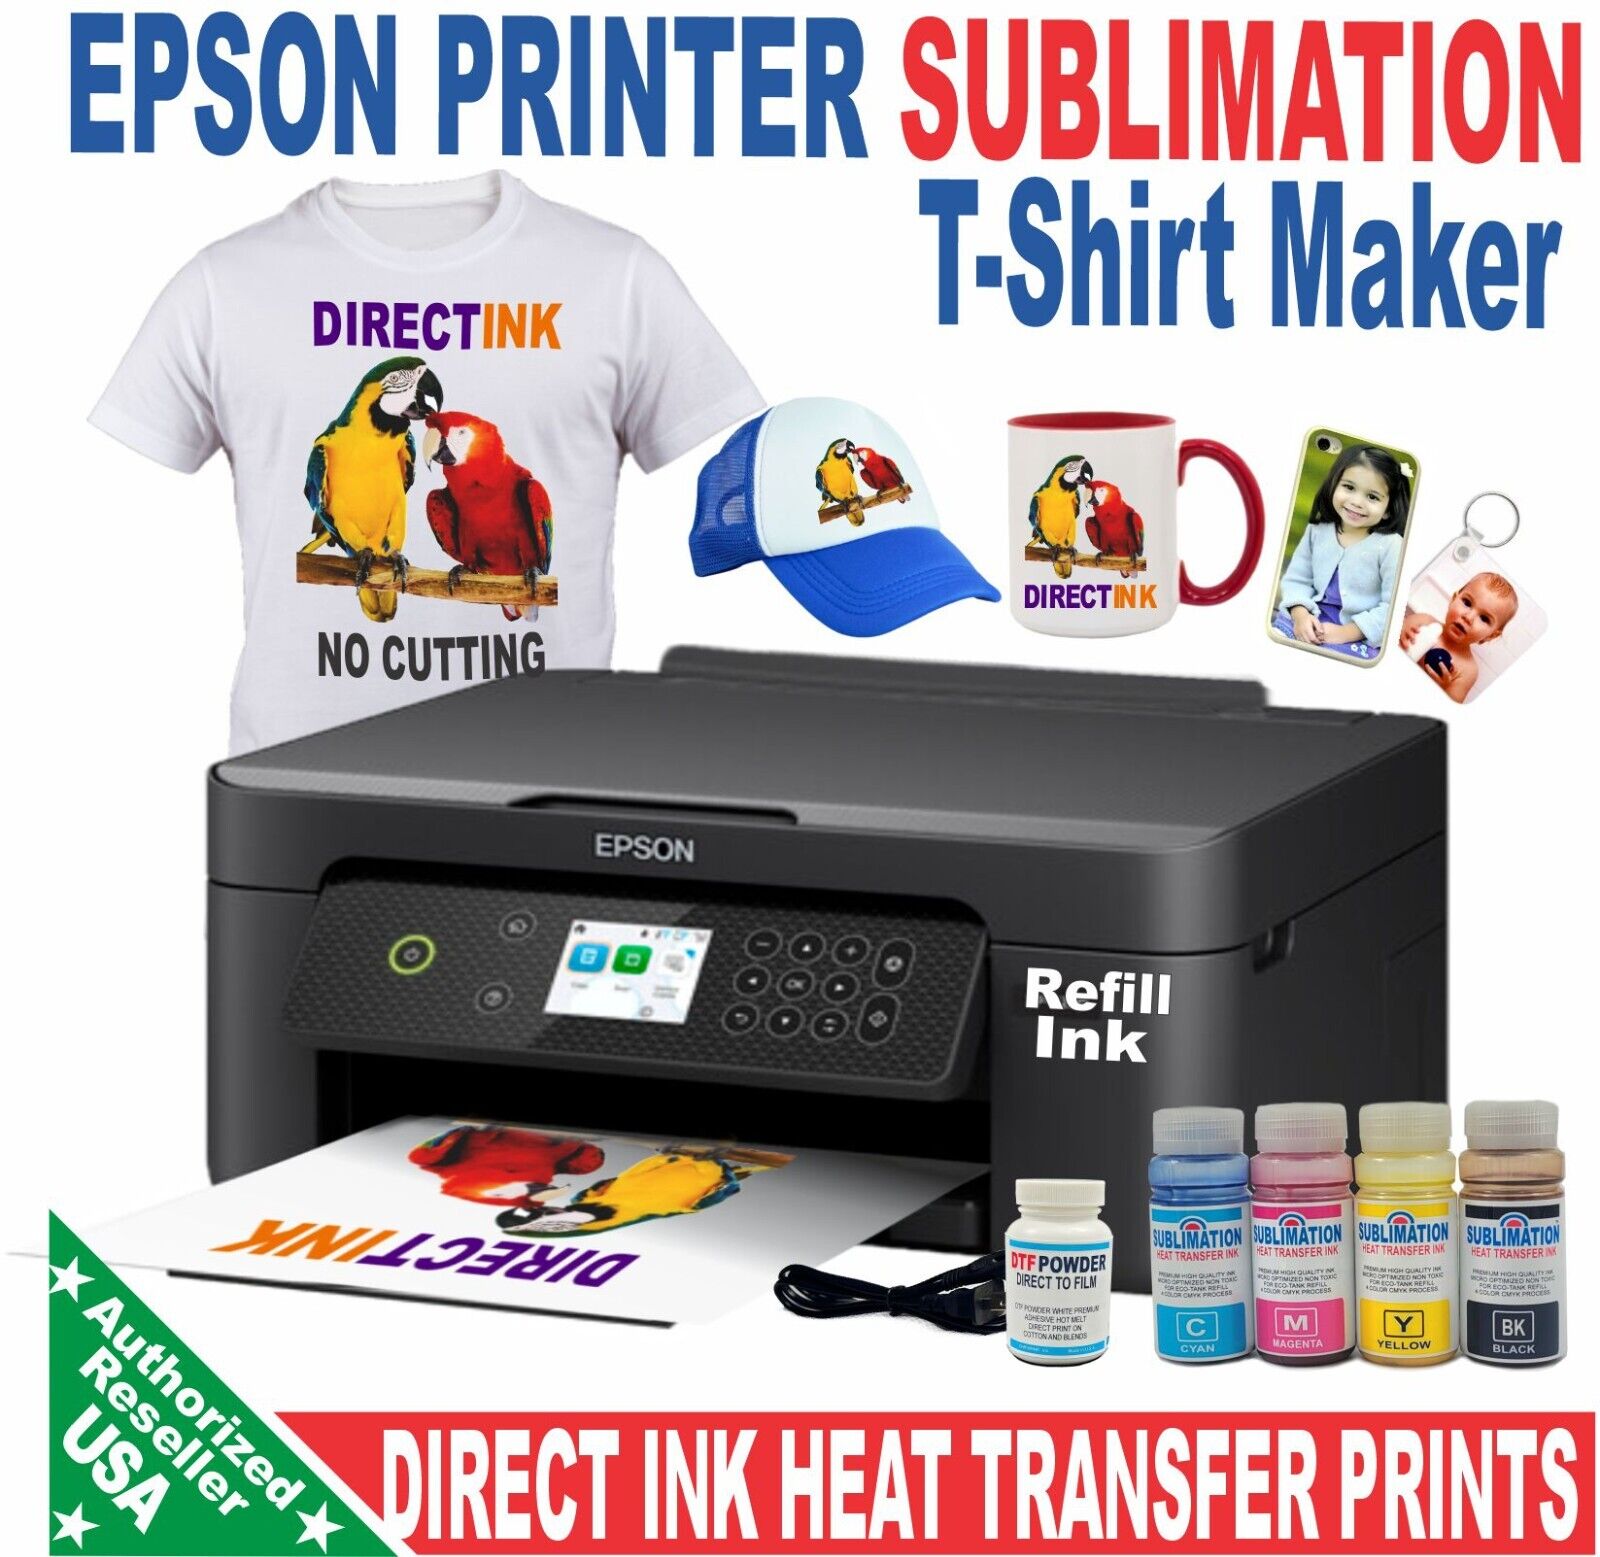 Epson Printer Sublimation ink plus Print T-Shirt Maker Starter Kit Bundle